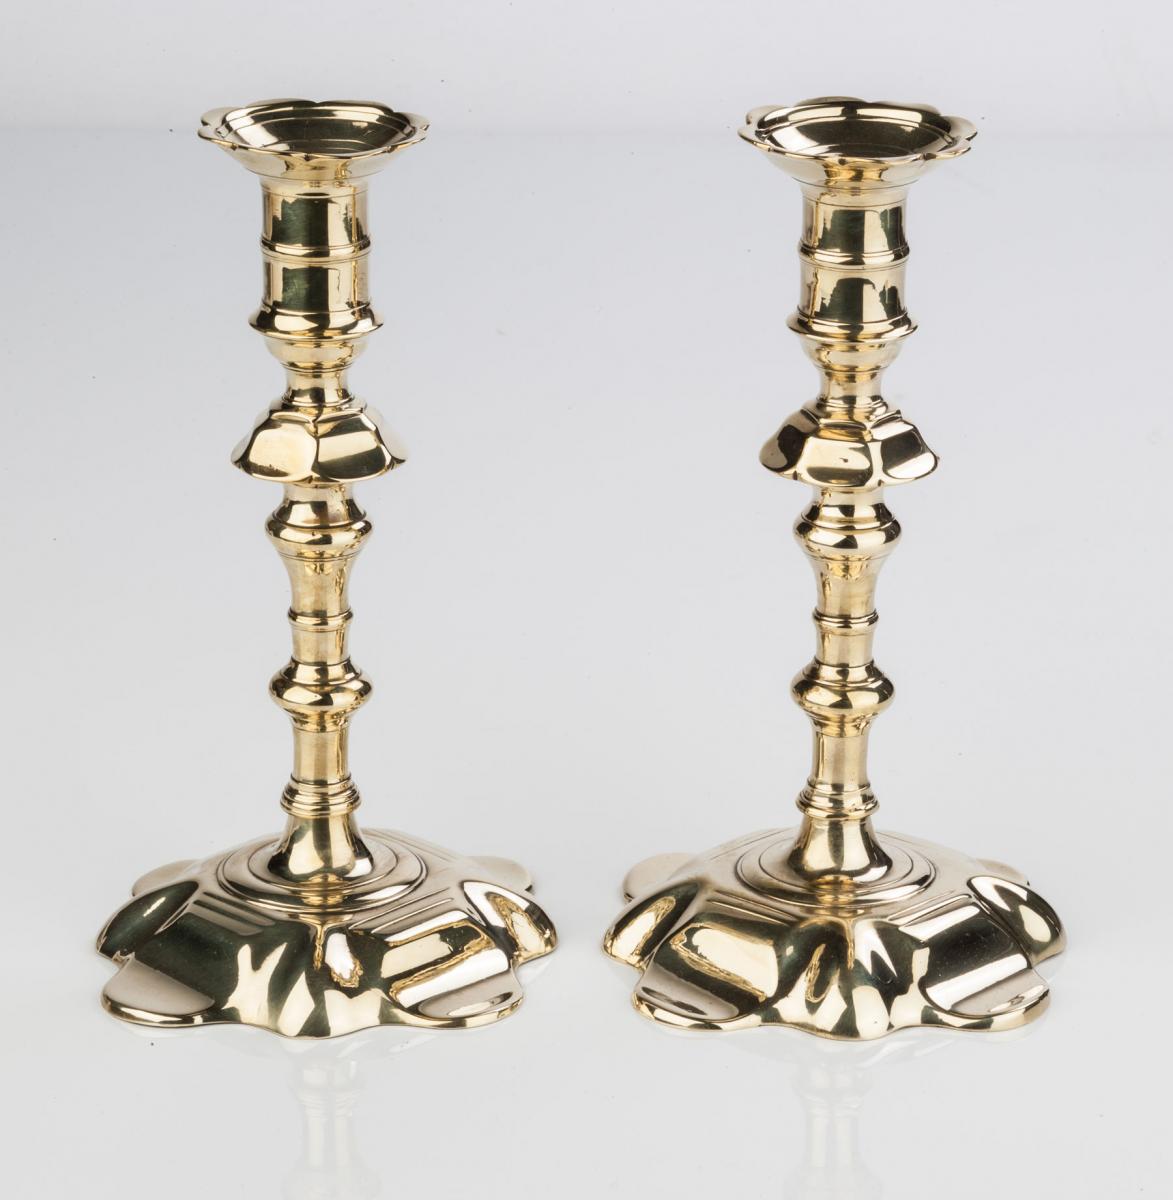 George II petal-based brass candlesticks